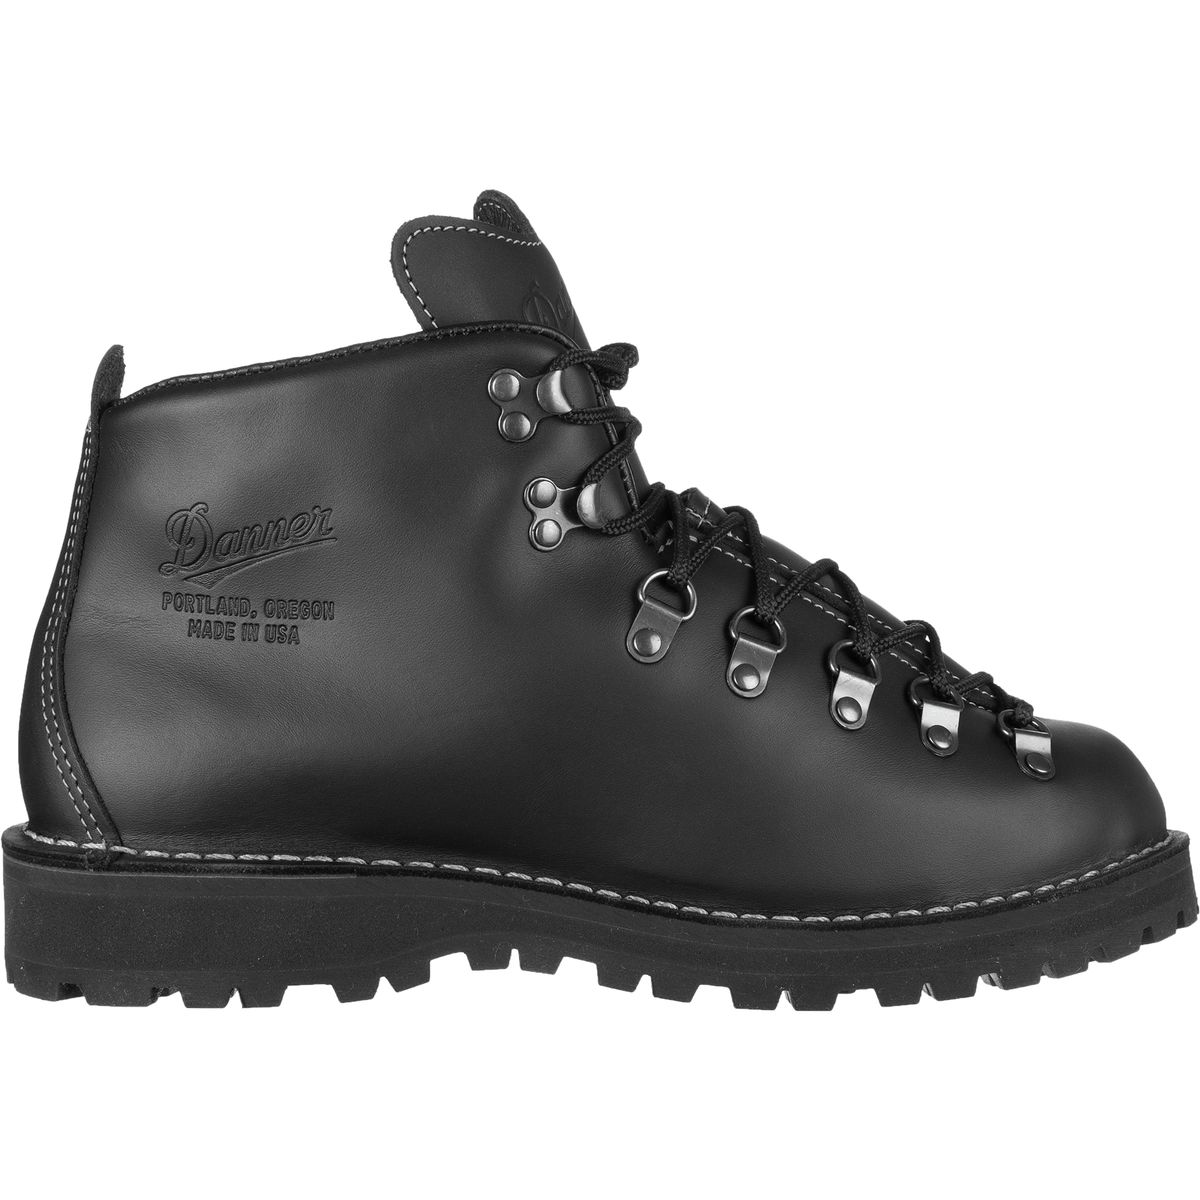 Danner Mountain Light 2 Leather Hiking Boot - Men's